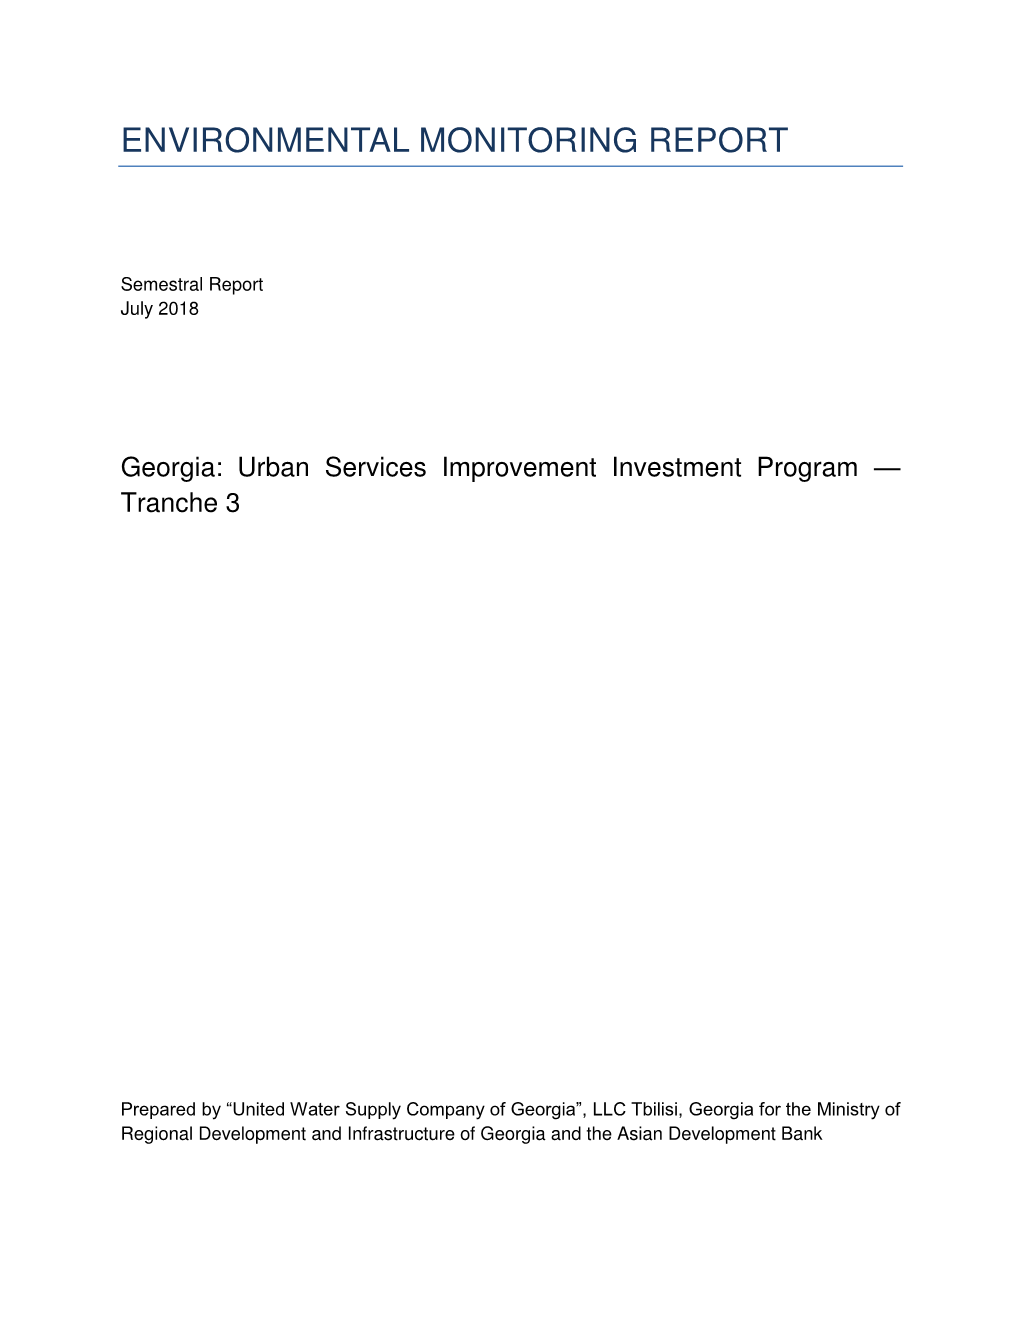 Georgia: Urban Services Improvement Investment Program — Tranche 3